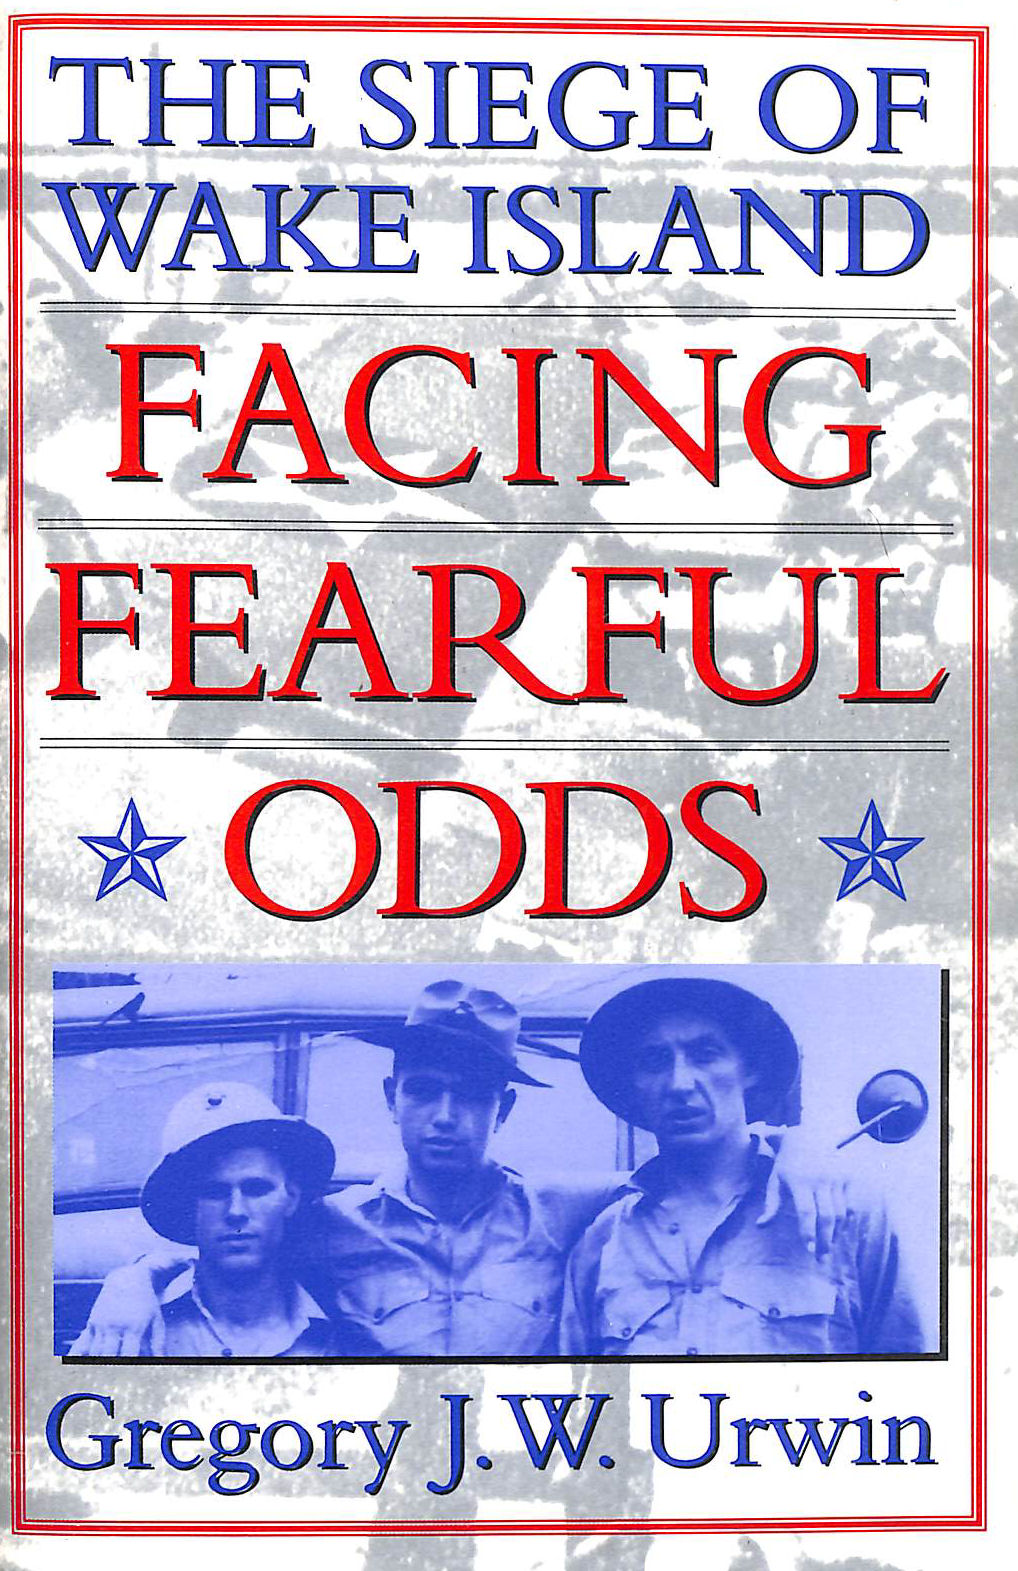 URWIN, GREGORY J. W. - Facing Fearful Odds: The Siege of Wake Island